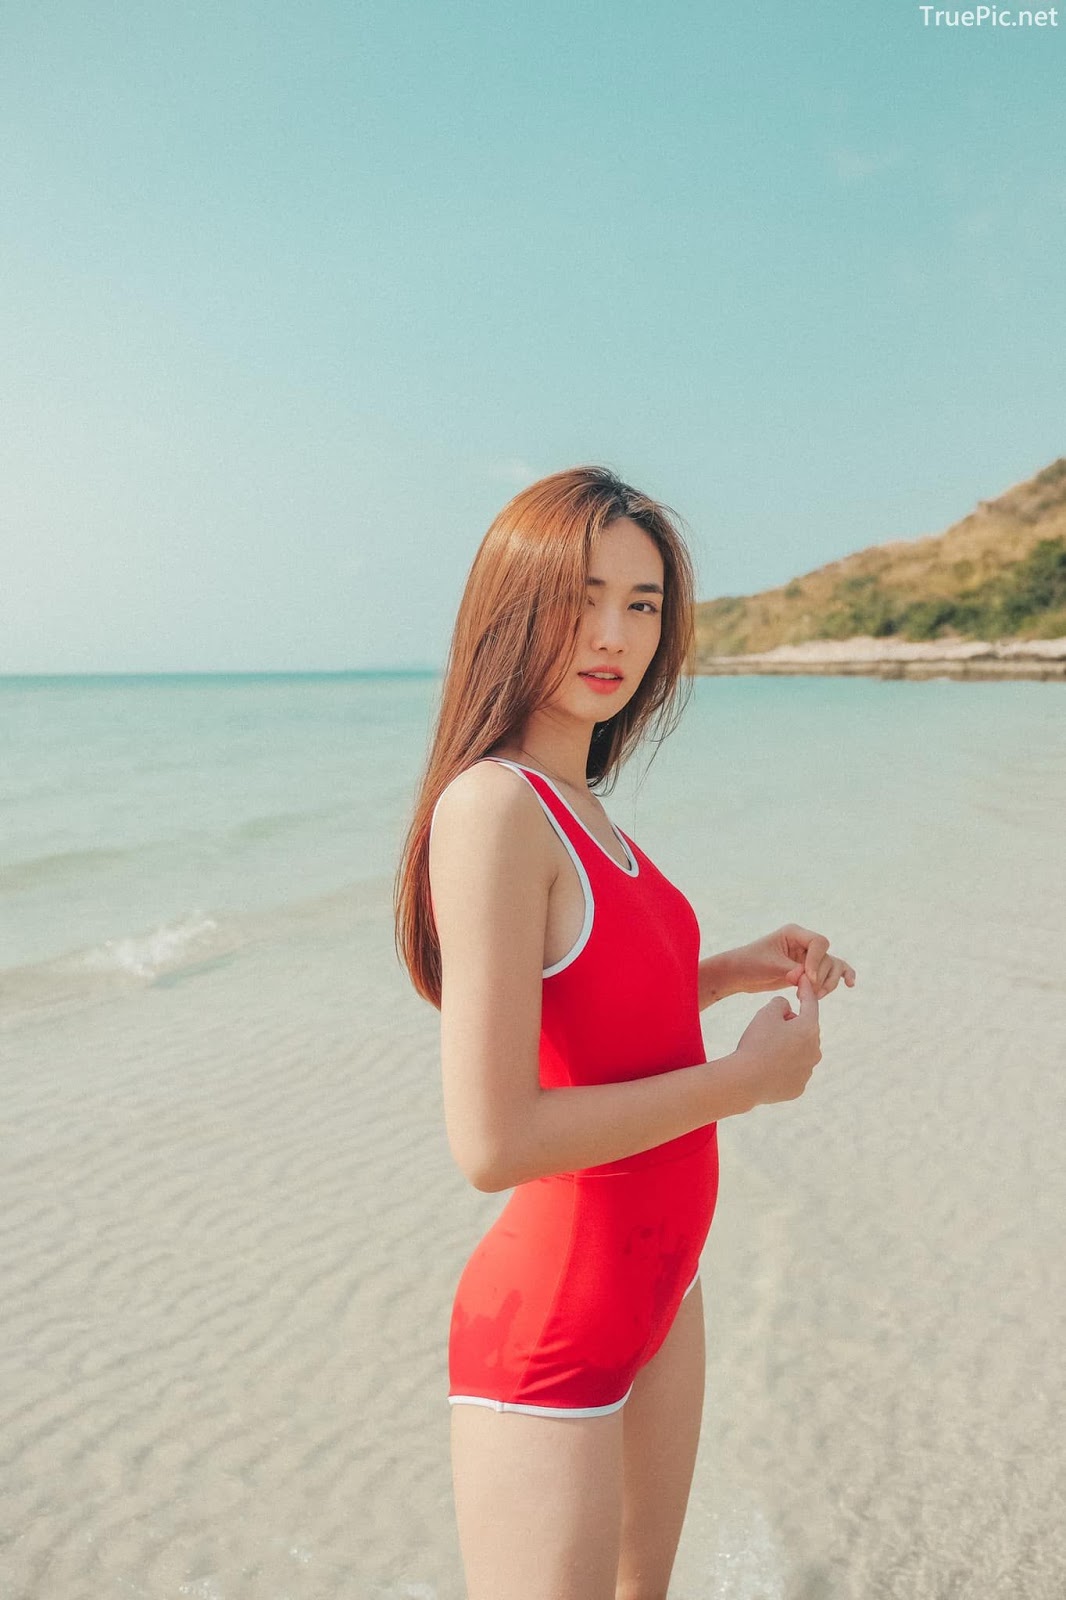 Miss Teen Thailand - Kanyarat Ruangrung - The Red Monokini On The Beach - TruePic.net - Picture 15